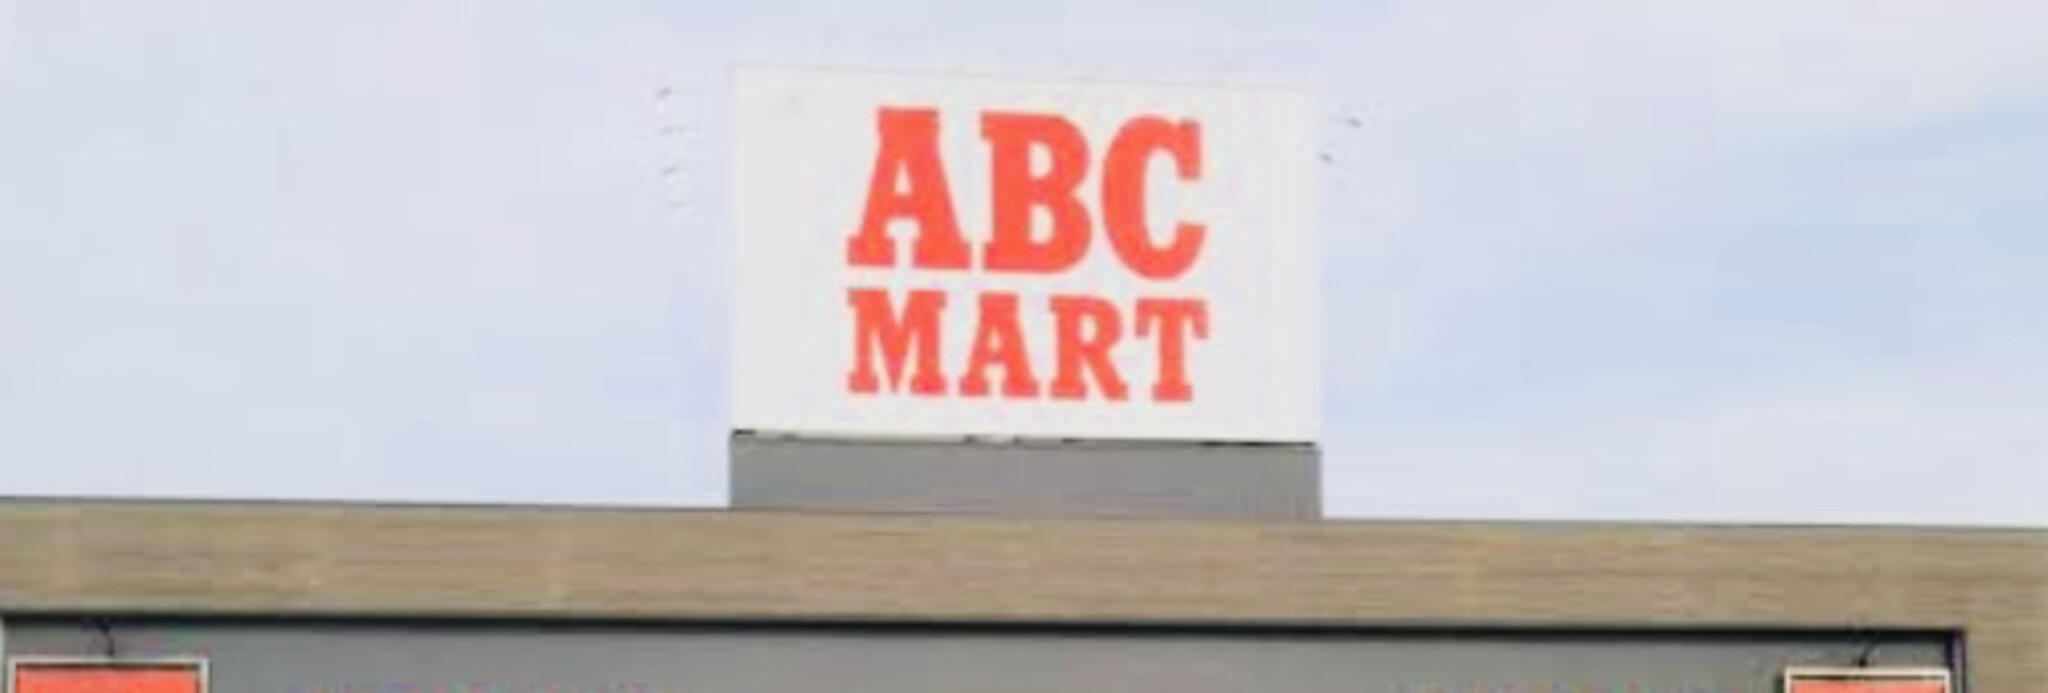 ABCマート 大津真野店の代表写真1